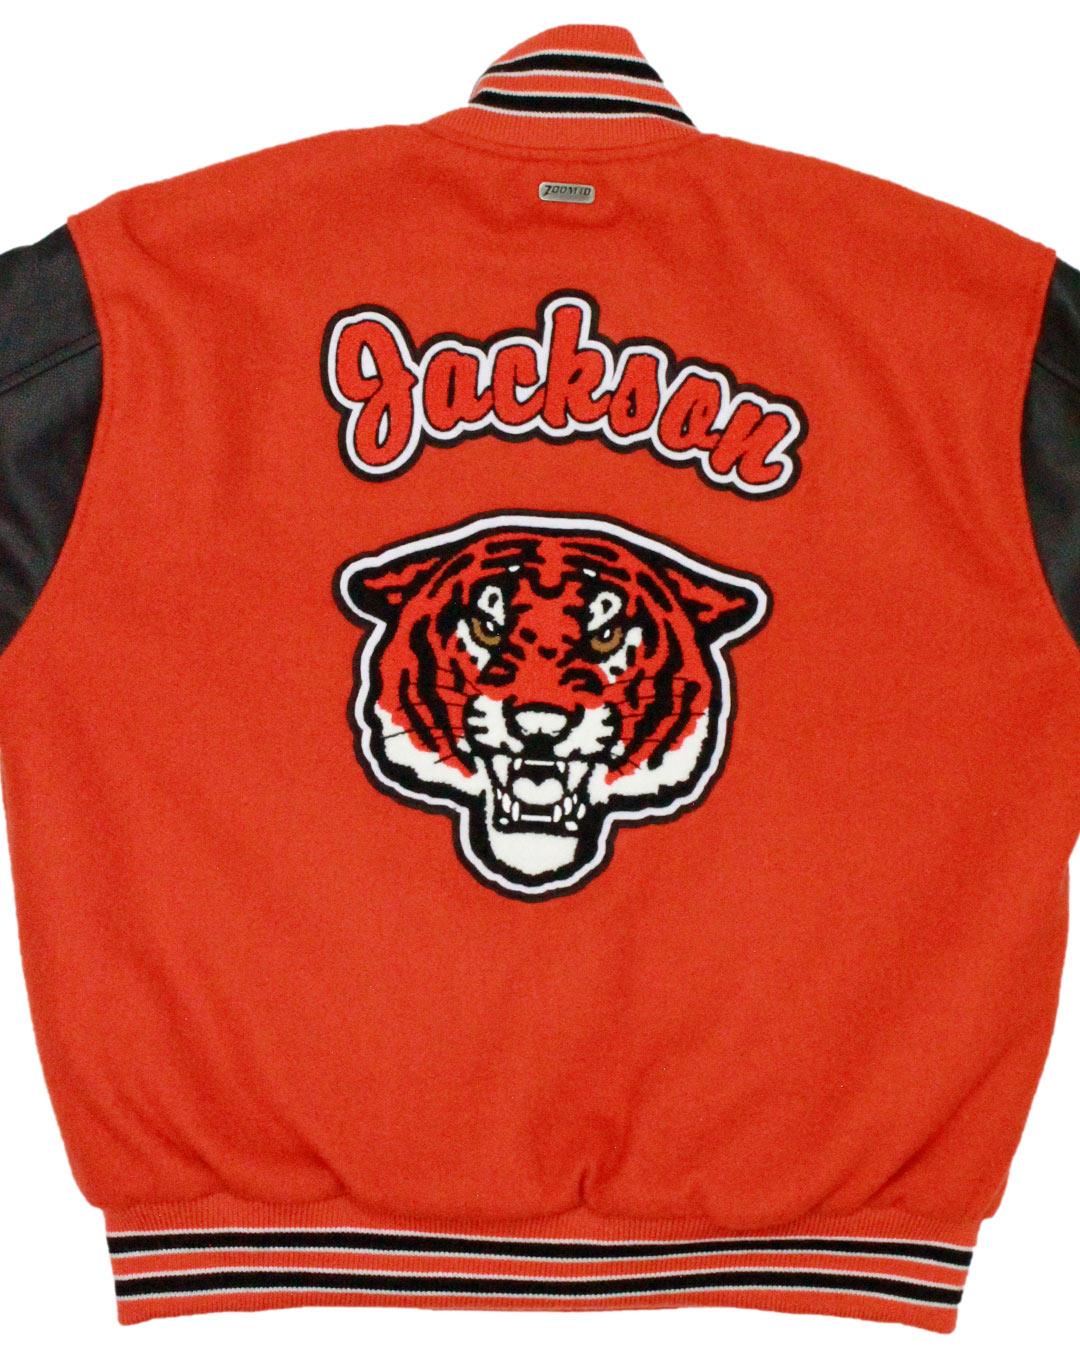 Republic High School Tigers Letterman Jacket, Republic, WA - Back 